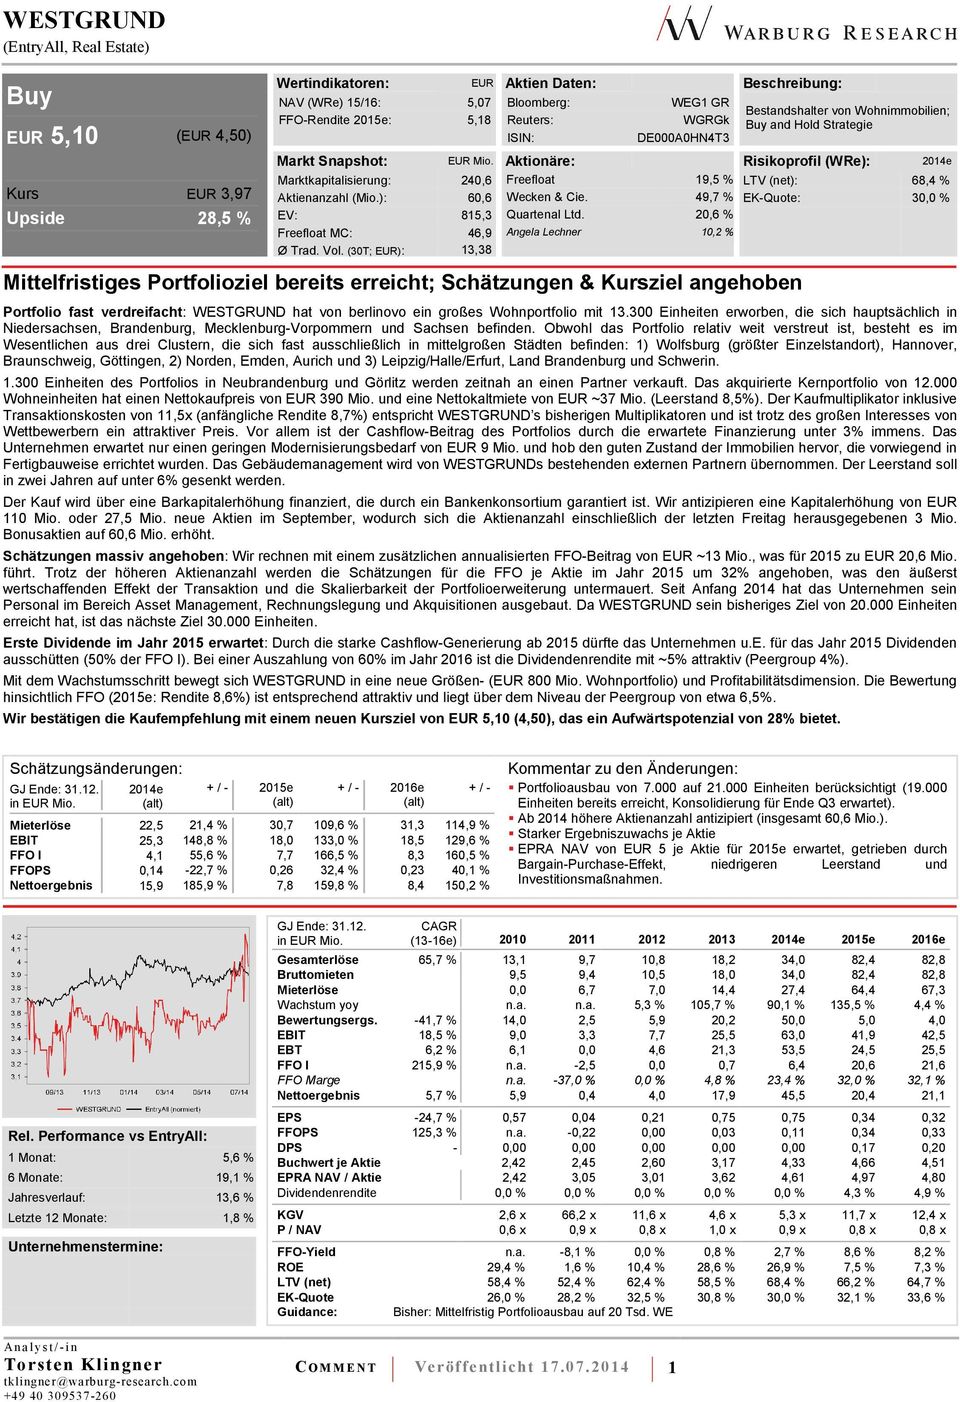 Aktionäre: Risikoprofil (WRe): 2014e Marktkapitalisierung: 240,6 Freefloat 19,5 % LTV (net): 68,4 % Aktienanzahl (Mio.): 60,6 Wecken & Cie. 49,7 % EK-Quote: 30,0 % EV: 815,3 Quartenal Ltd.